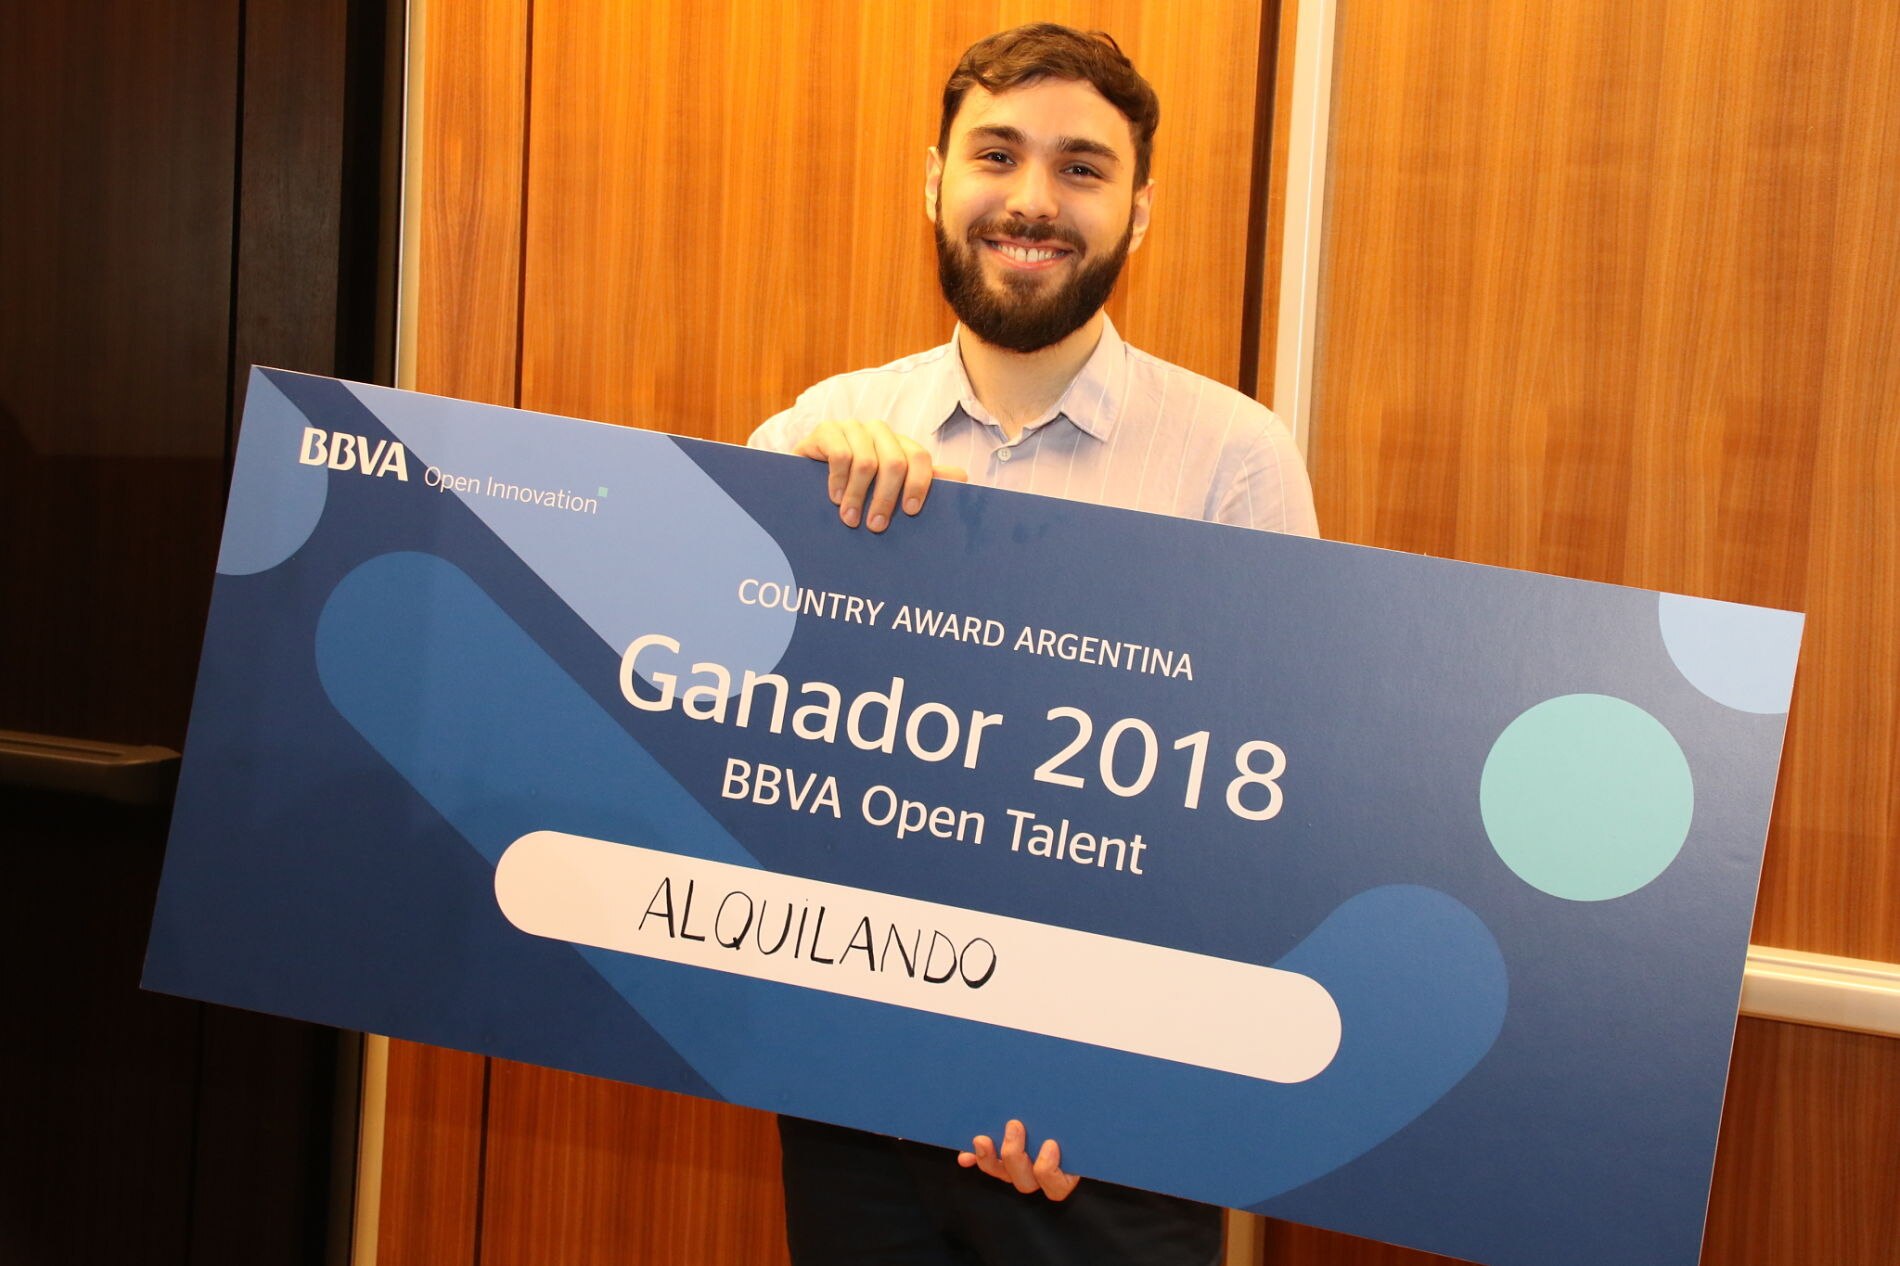 Carlos Missirian de Alquilando, ganador de BBVA Open Talent 2018 en Argentina